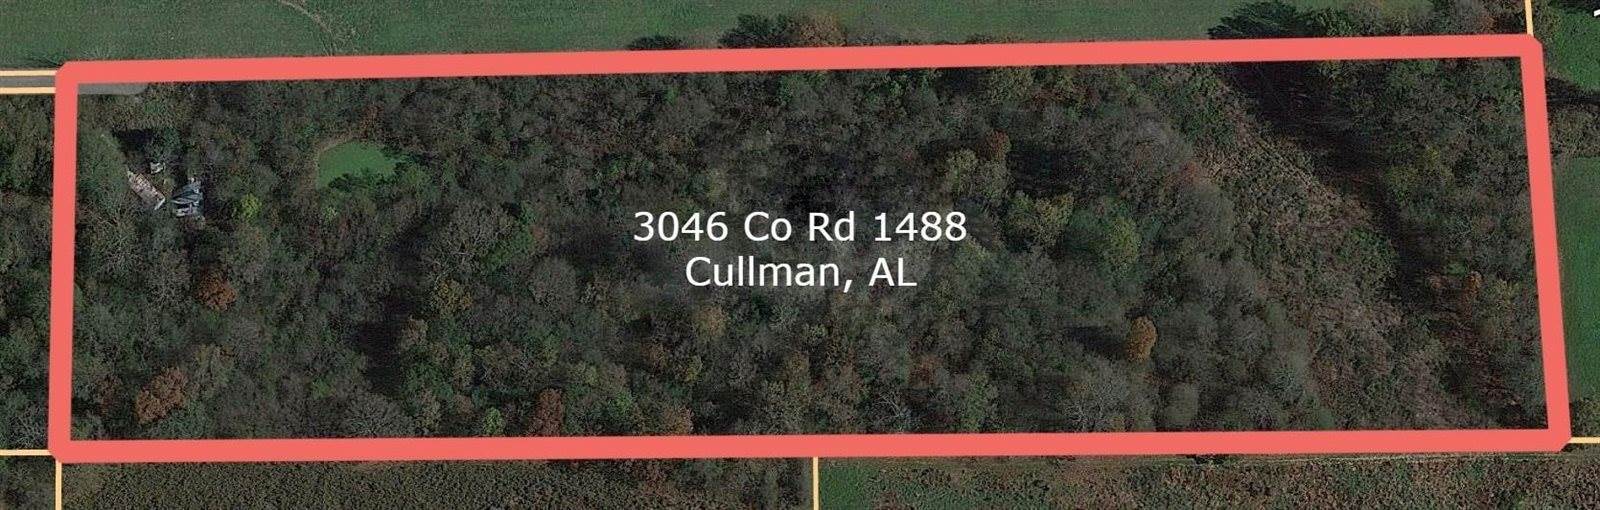 3046 Co Rd 1488, Cullman, AL 35055